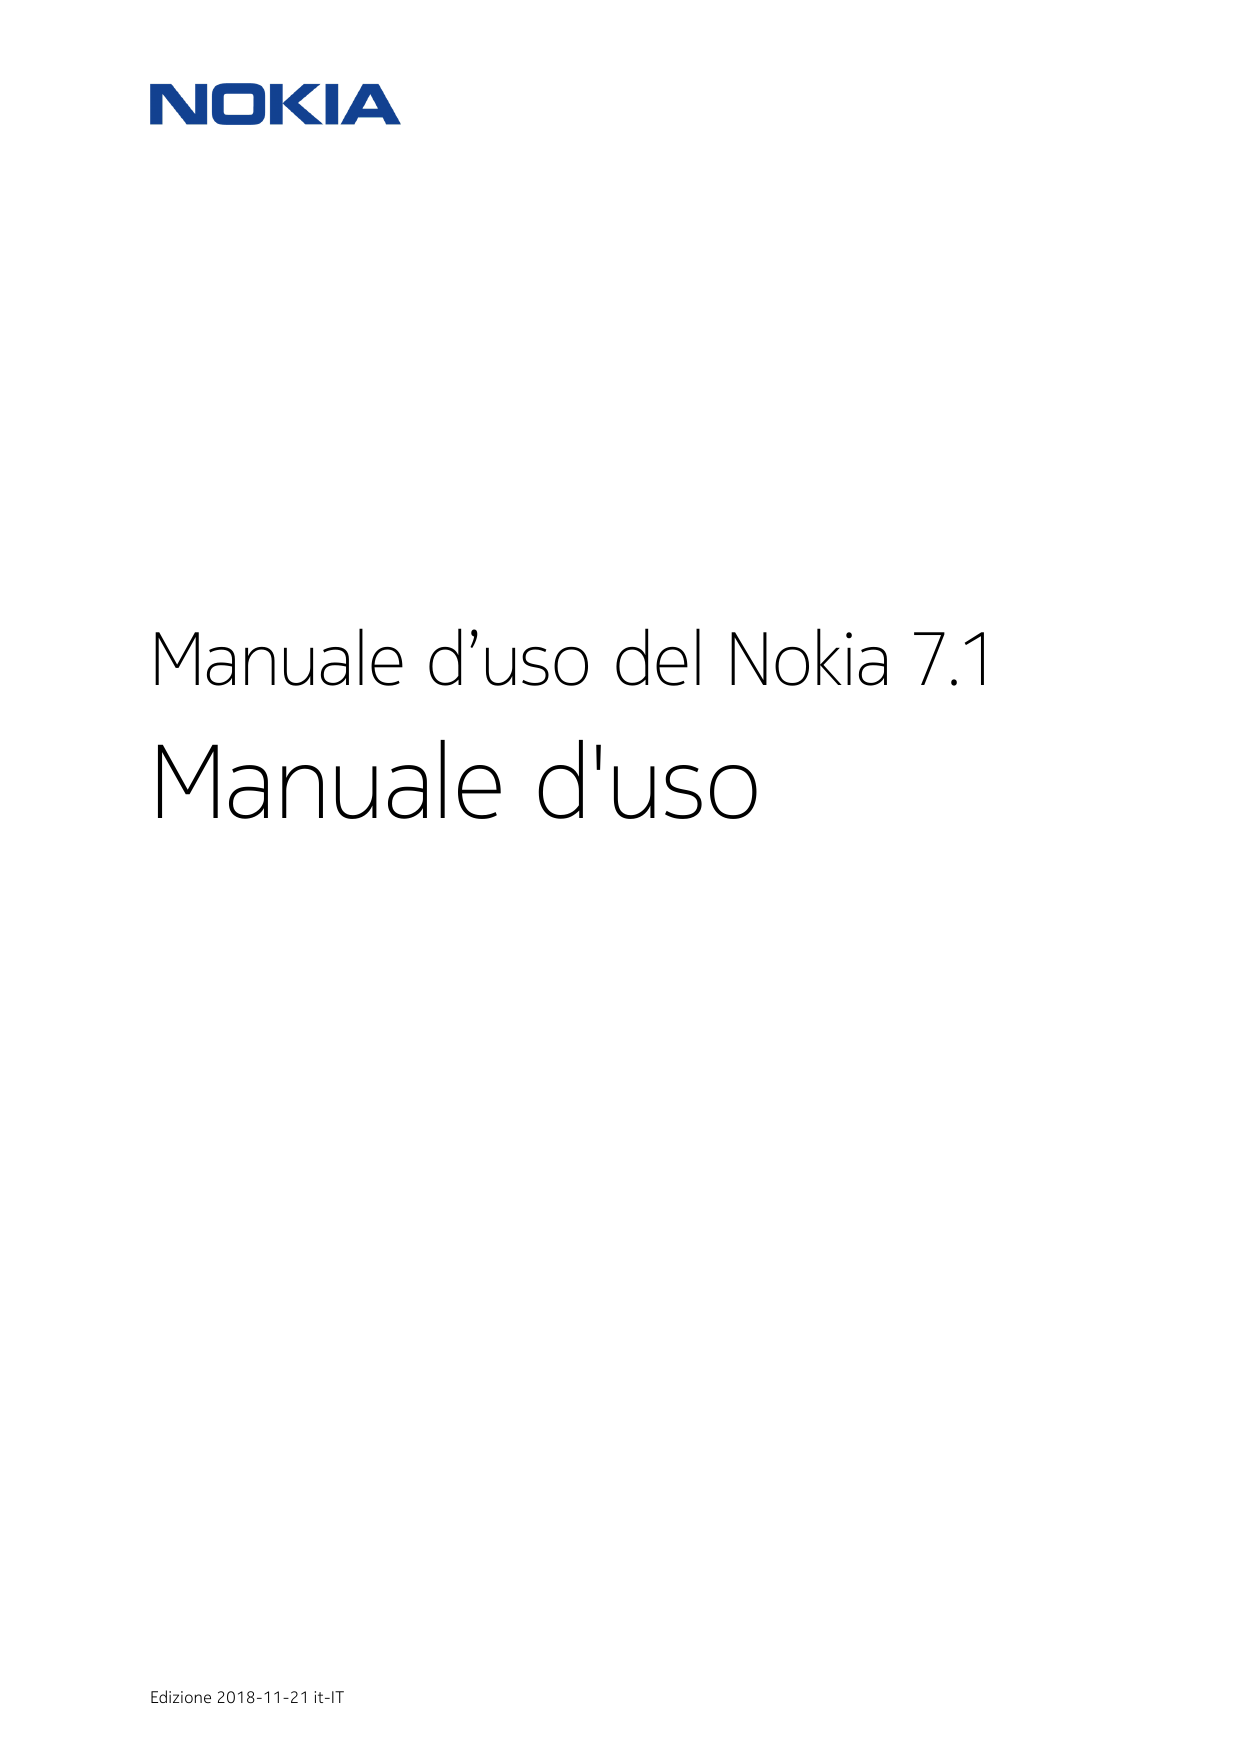 Manuale d’uso del Nokia 7.1Manuale d'usoEdizione 2018-11-21 it-IT